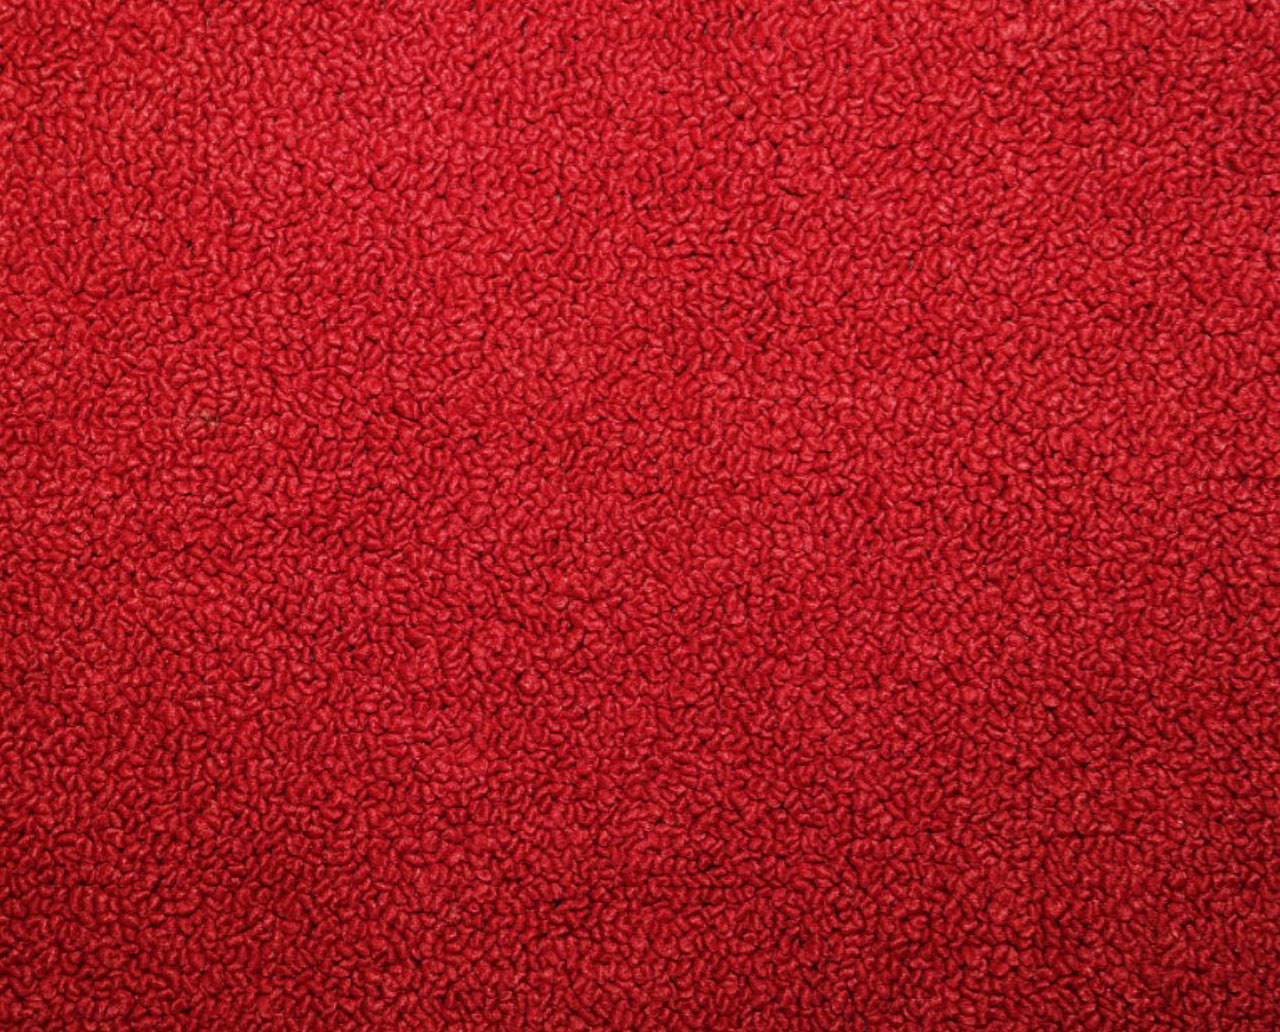 Holden Torana LC Torana SL Sedan 42R Calypso Red Carpet (Image 1 of 1)